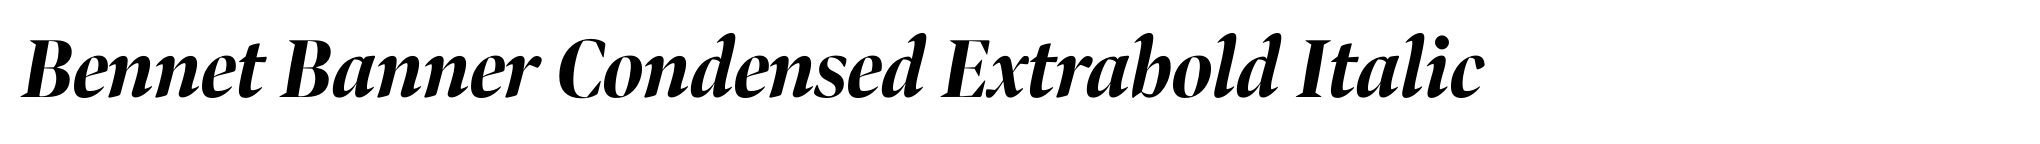 Bennet Banner Condensed Extrabold Italic image